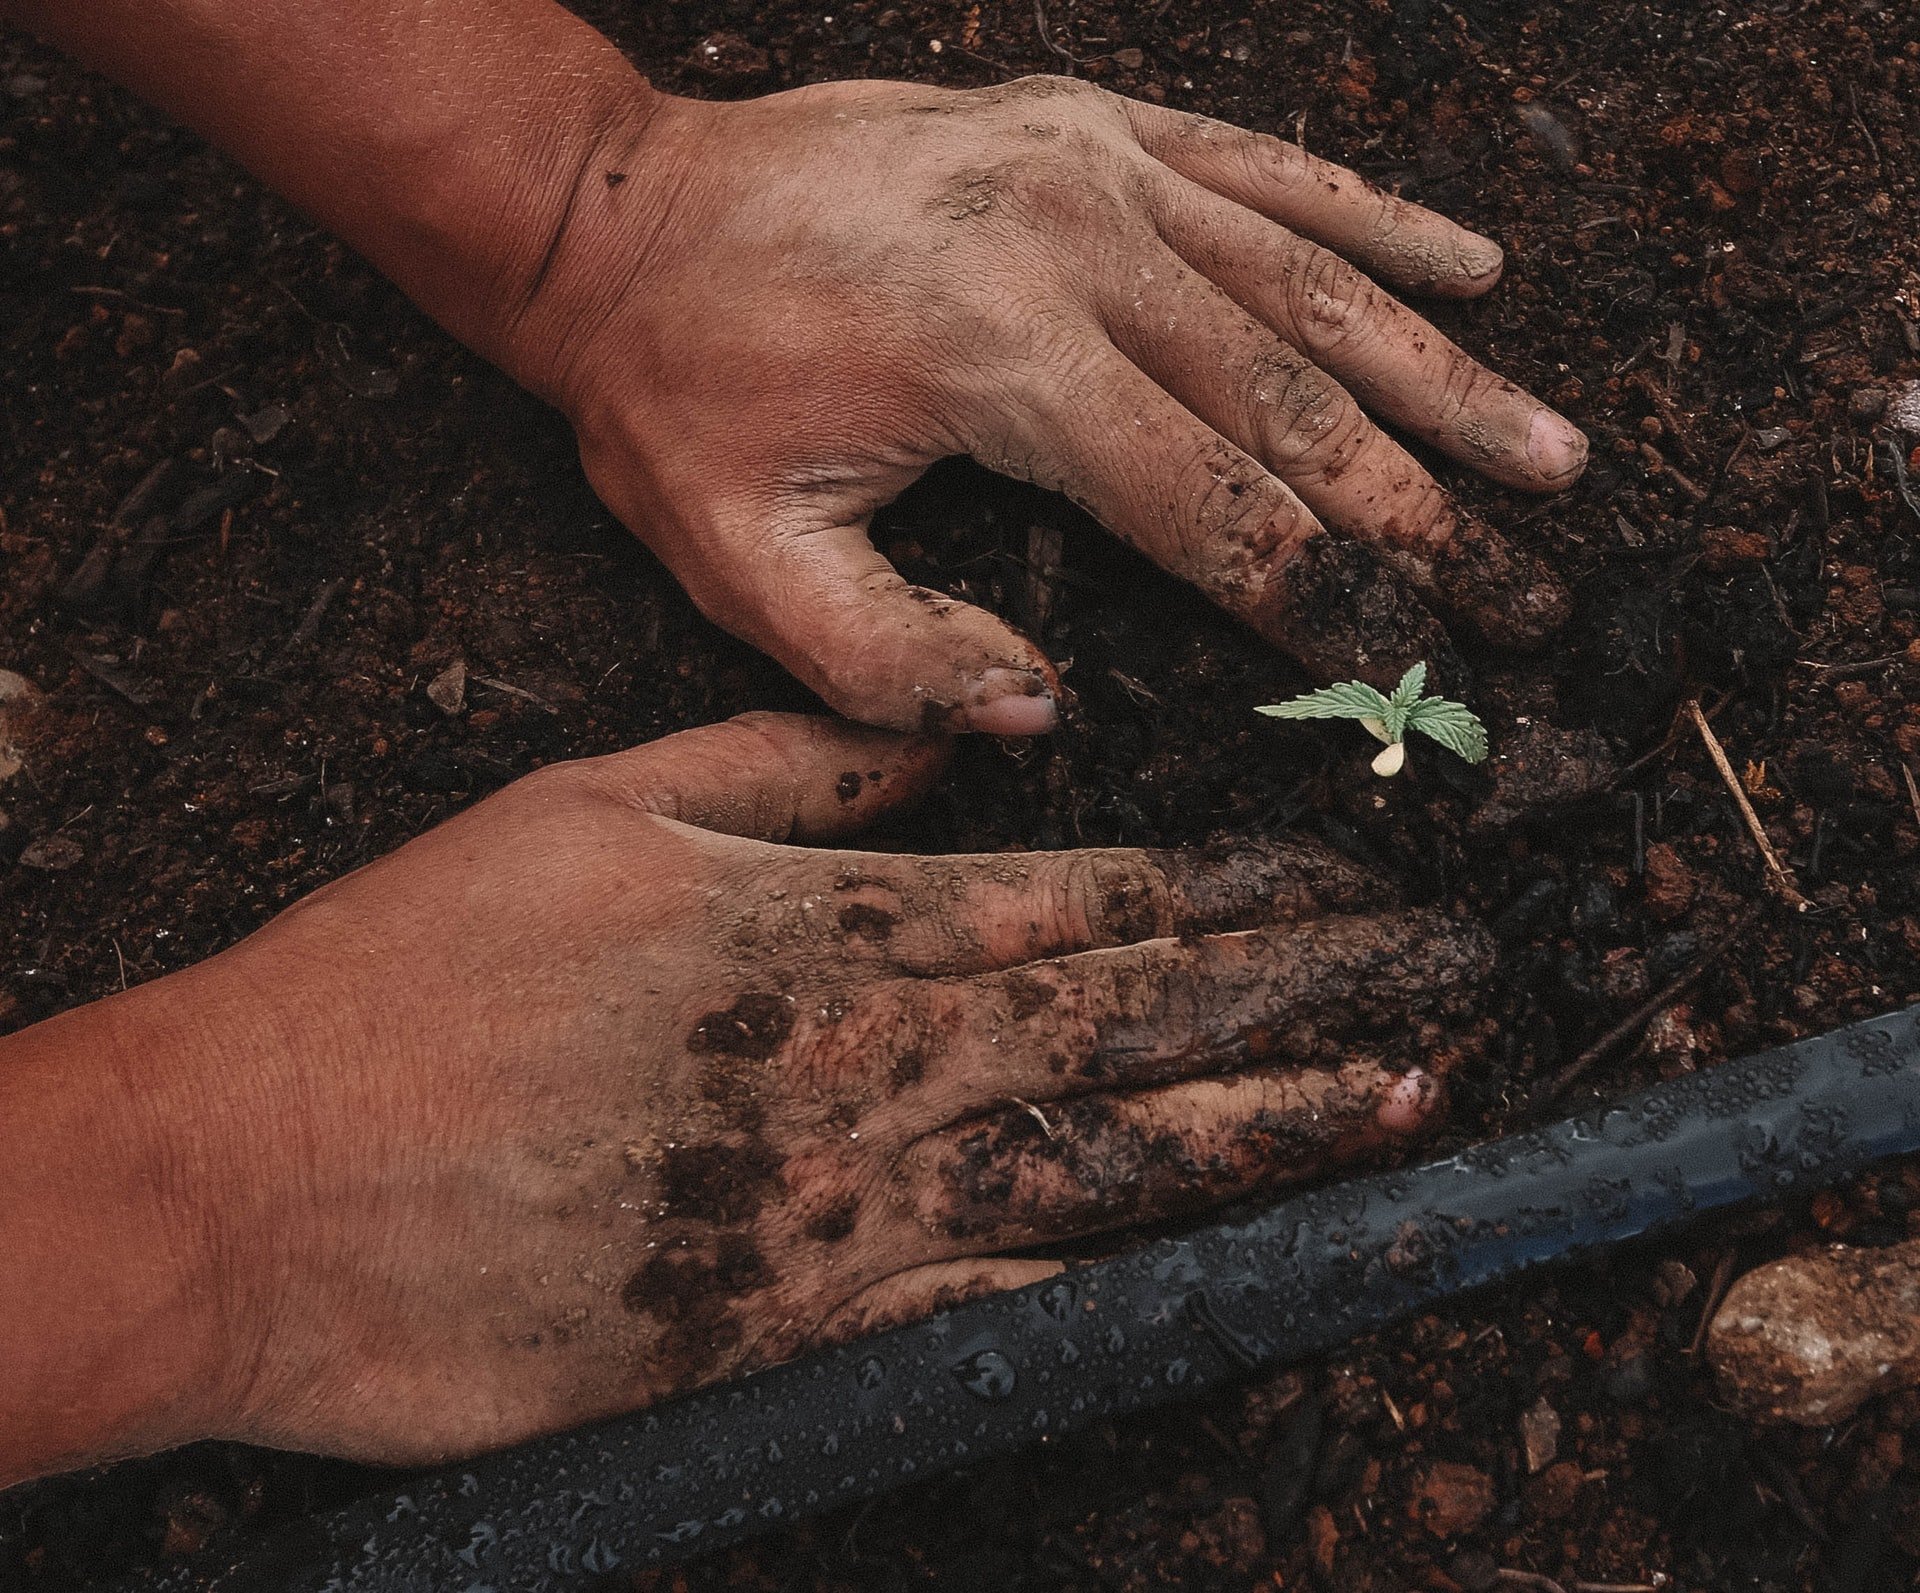 A man's hands seen planting in fresh soil